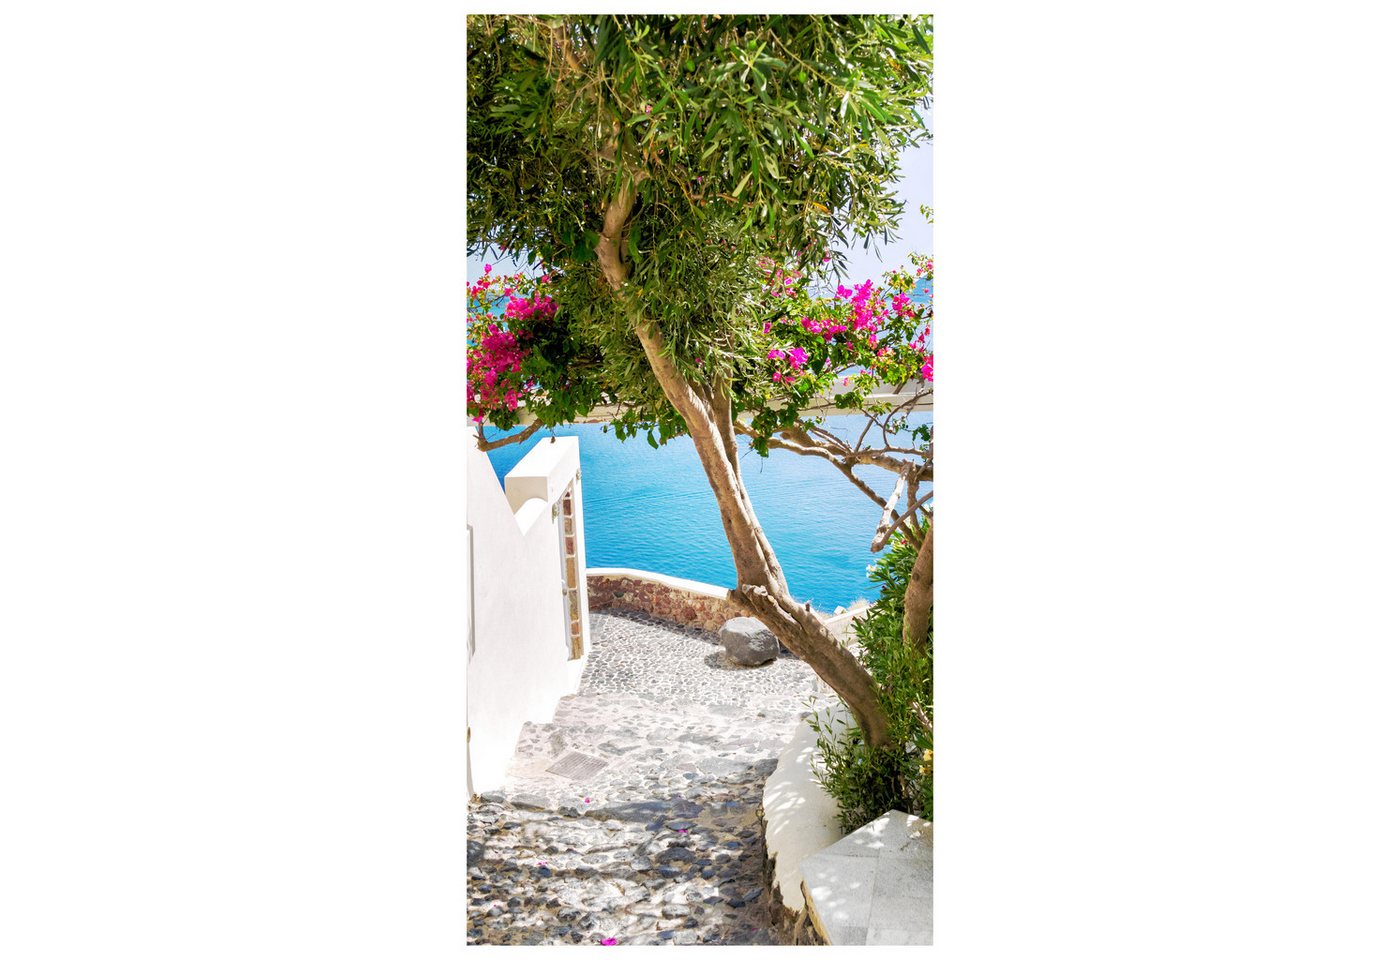 wandmotiv24 Türtapete Treppe mit Blick aufs Meer, Mediterran, glatt, Fototapete, Wandtapete, Motivtapete, matt, selbstklebende Vliestapete von wandmotiv24